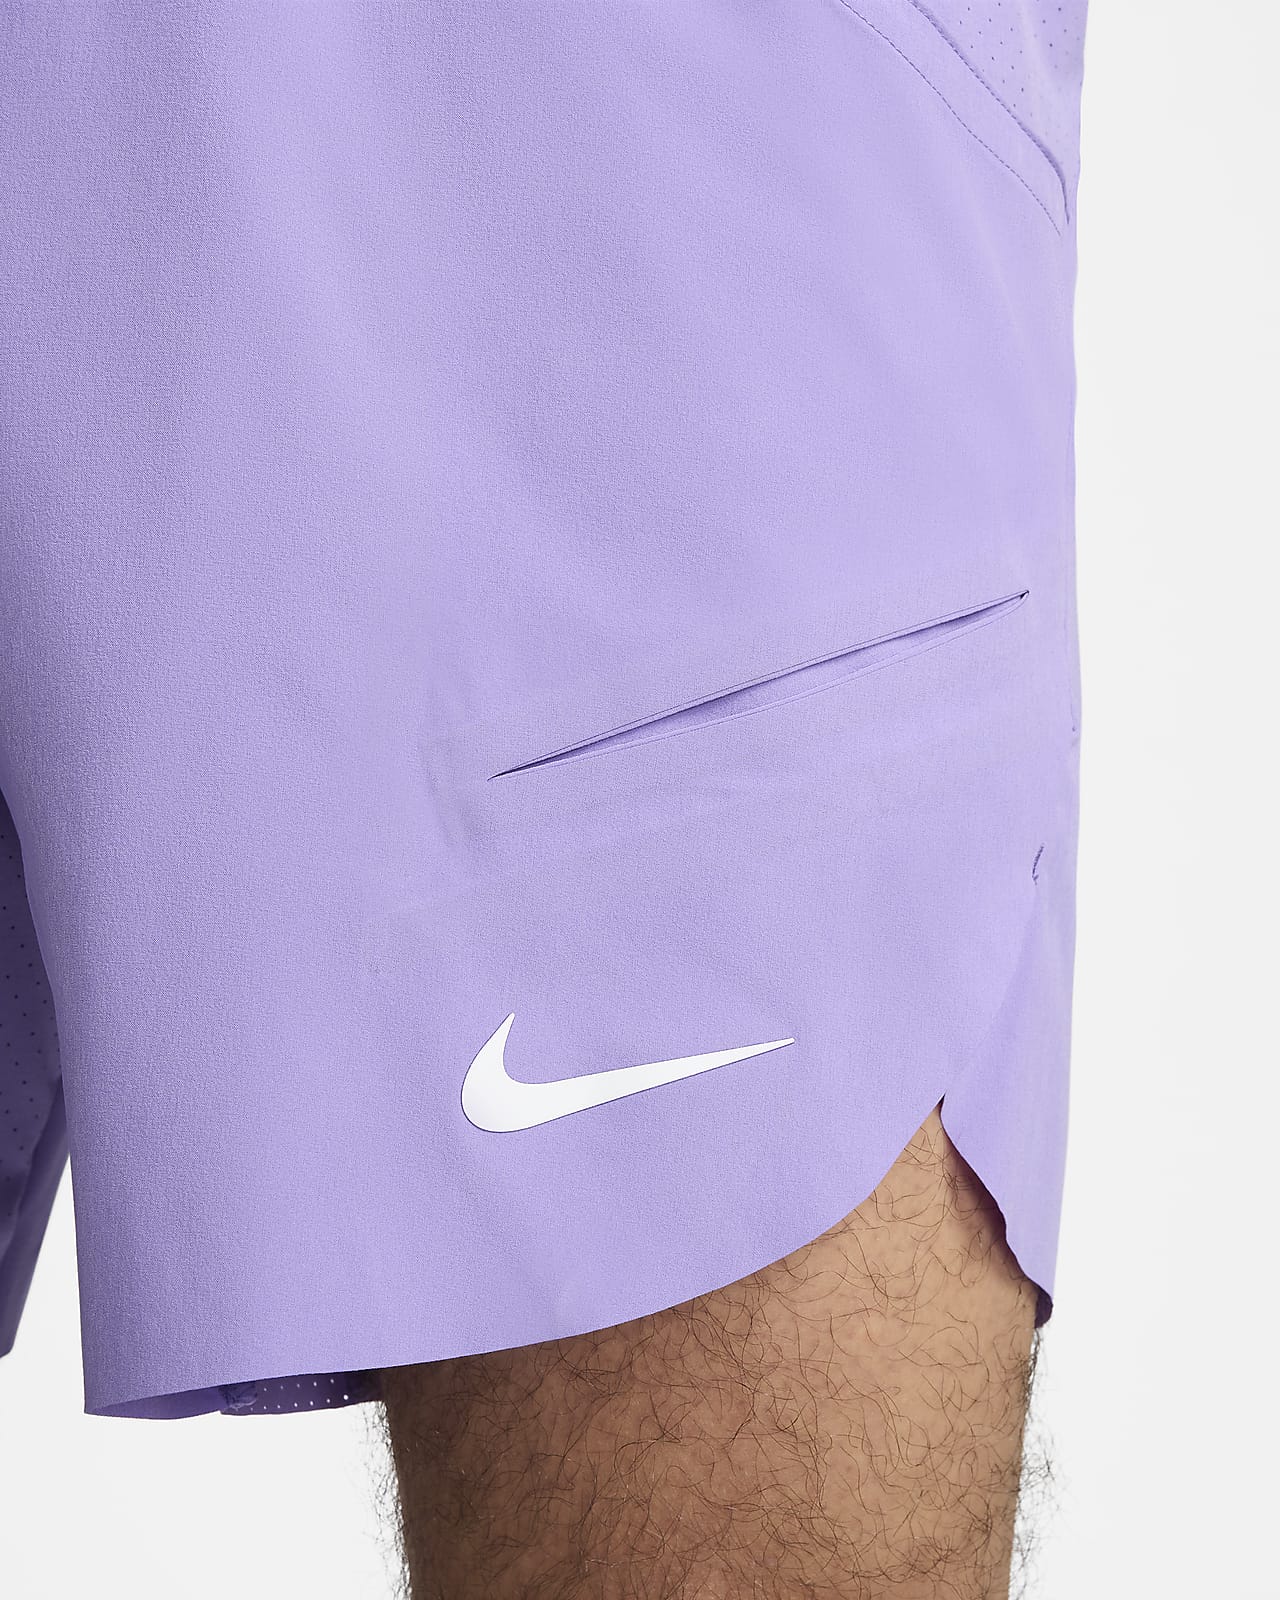 Nike Court Advantage Women's Tennis Short Purple/white